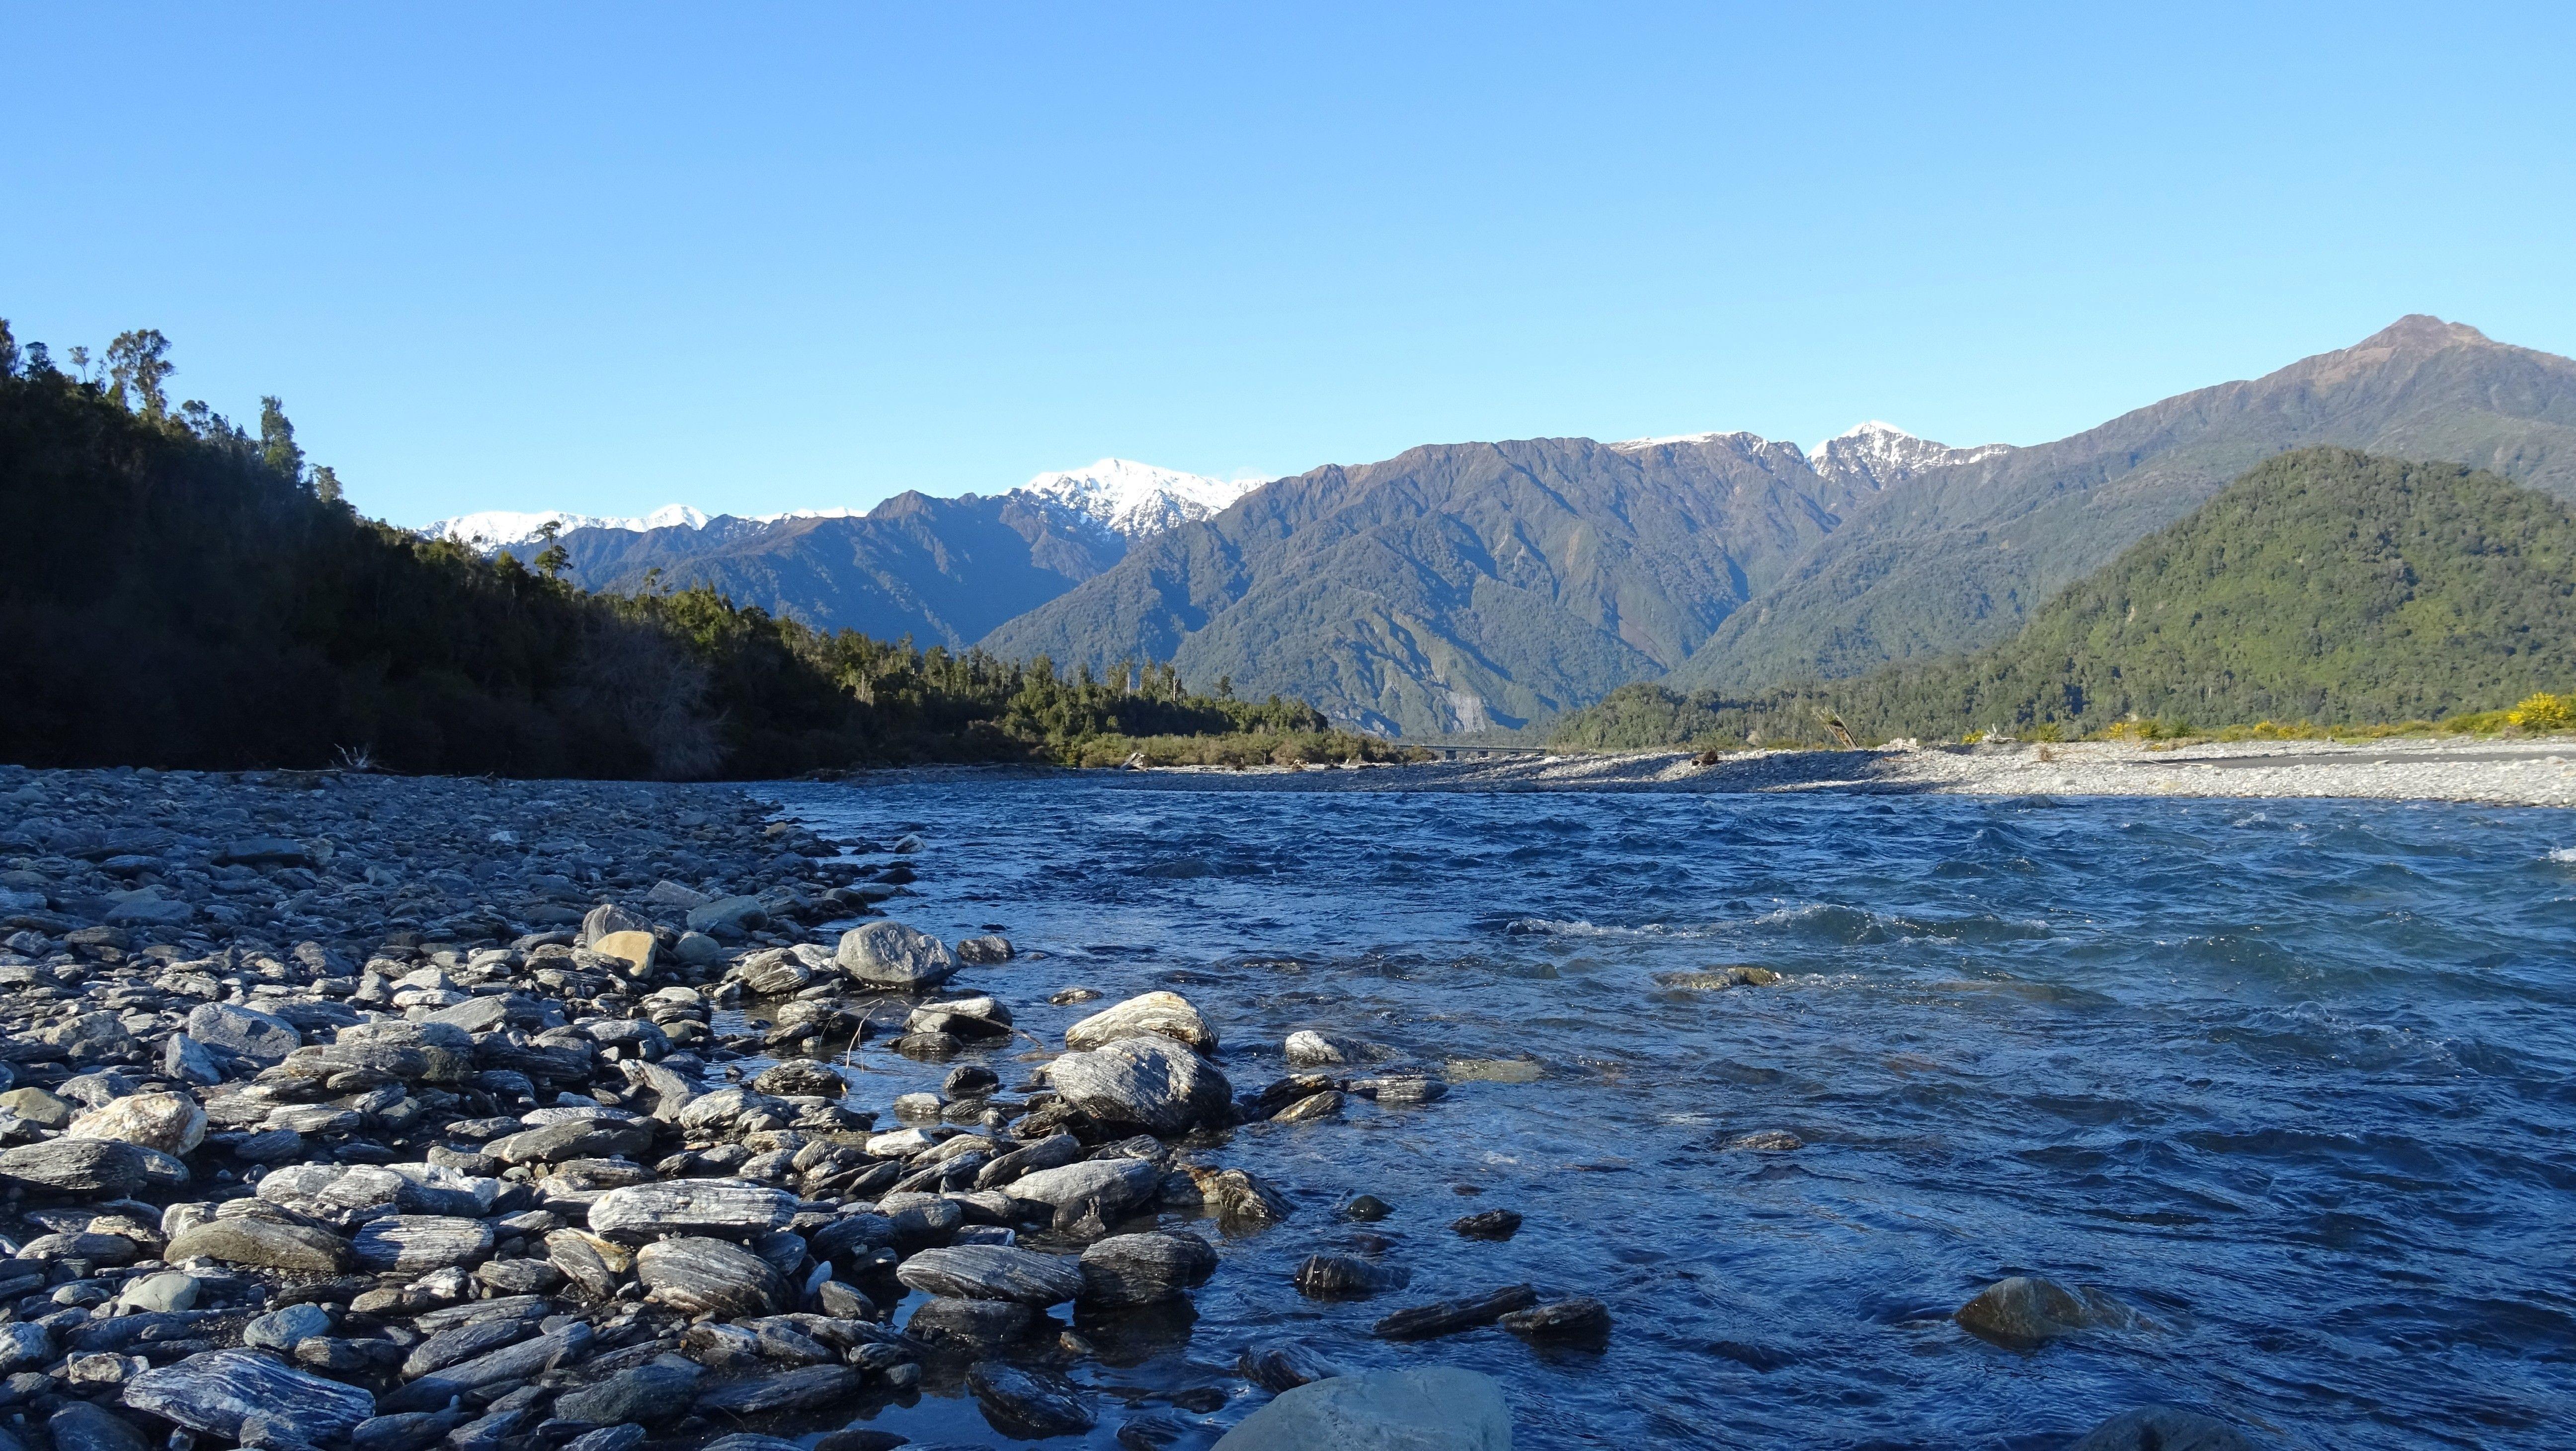 5184x2920 المناظر الطبيعية خلفية نهر نيوزيلندا طبيعة خلفية وخلفية